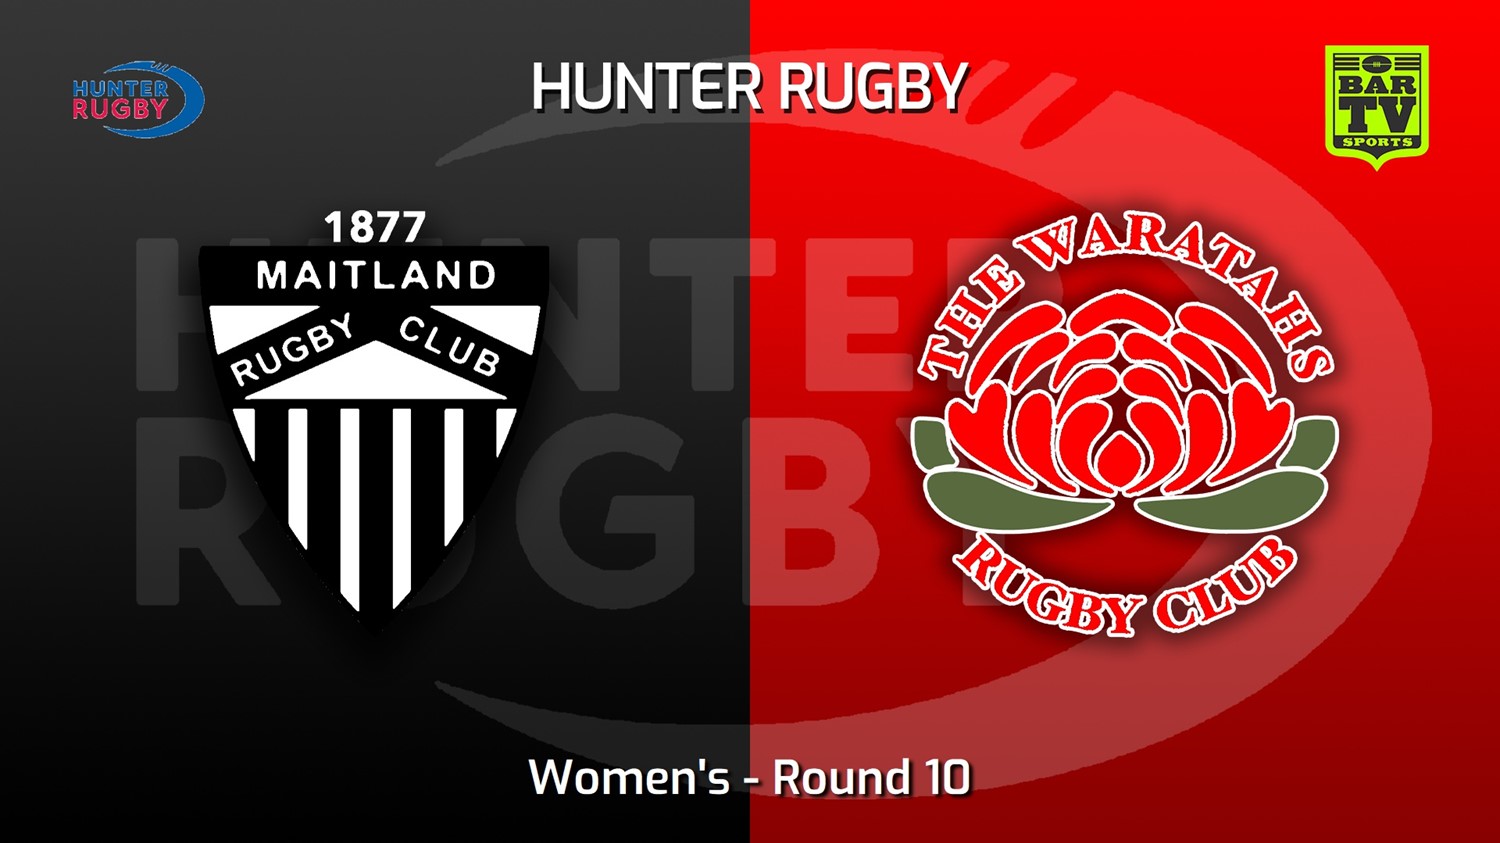 220702-Hunter Rugby Round 10 - Women's - Maitland v The Waratahs Slate Image